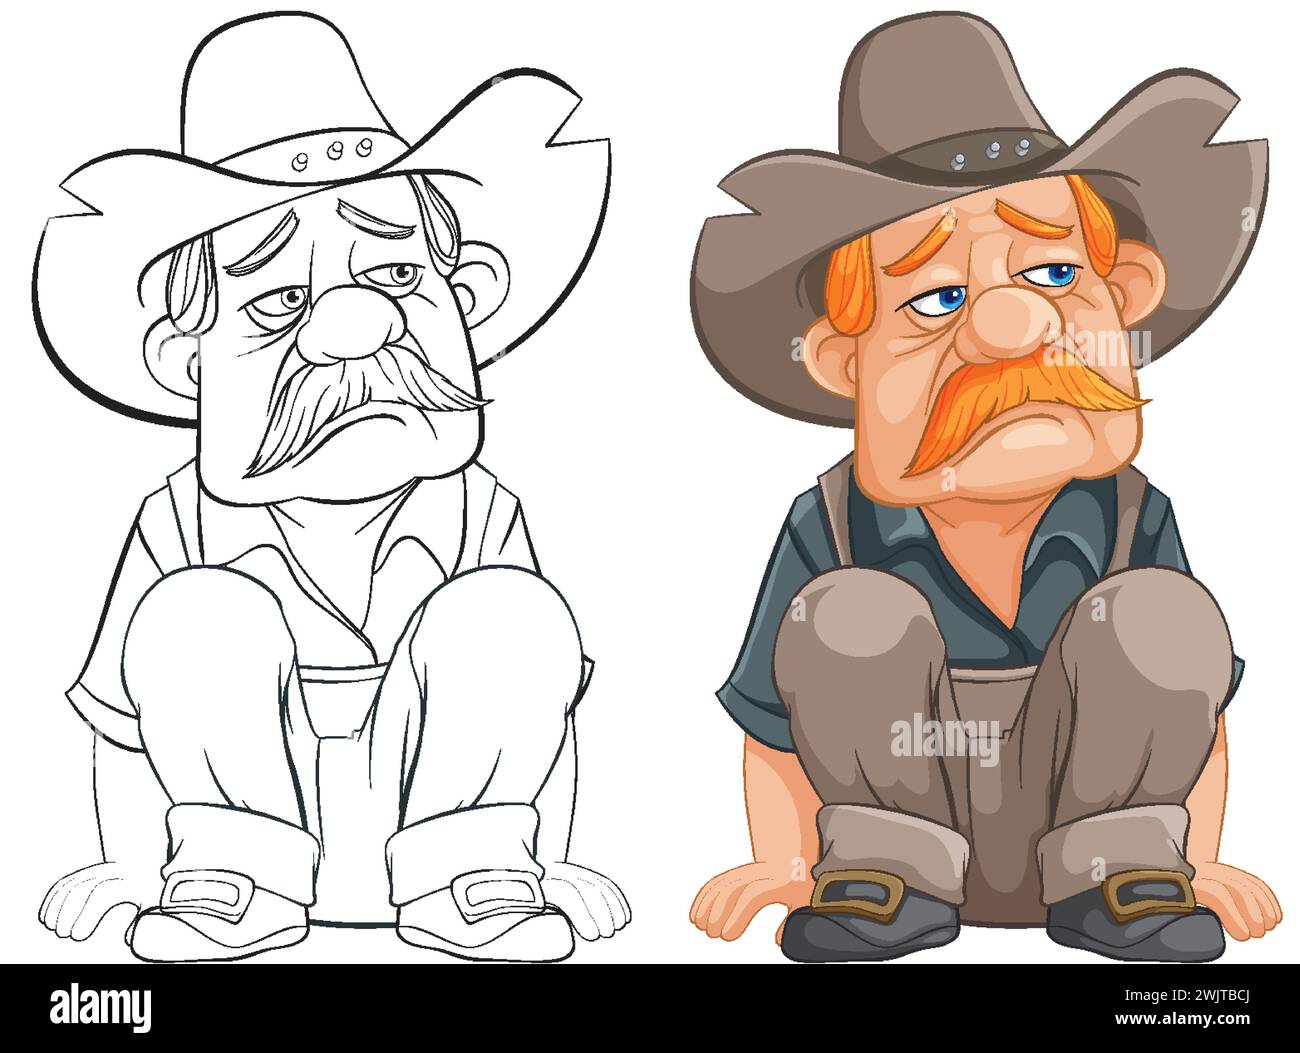 Zwei Cartoon-Cowboys mit düsteren Ausdrücken sitzen. Stock Vektor